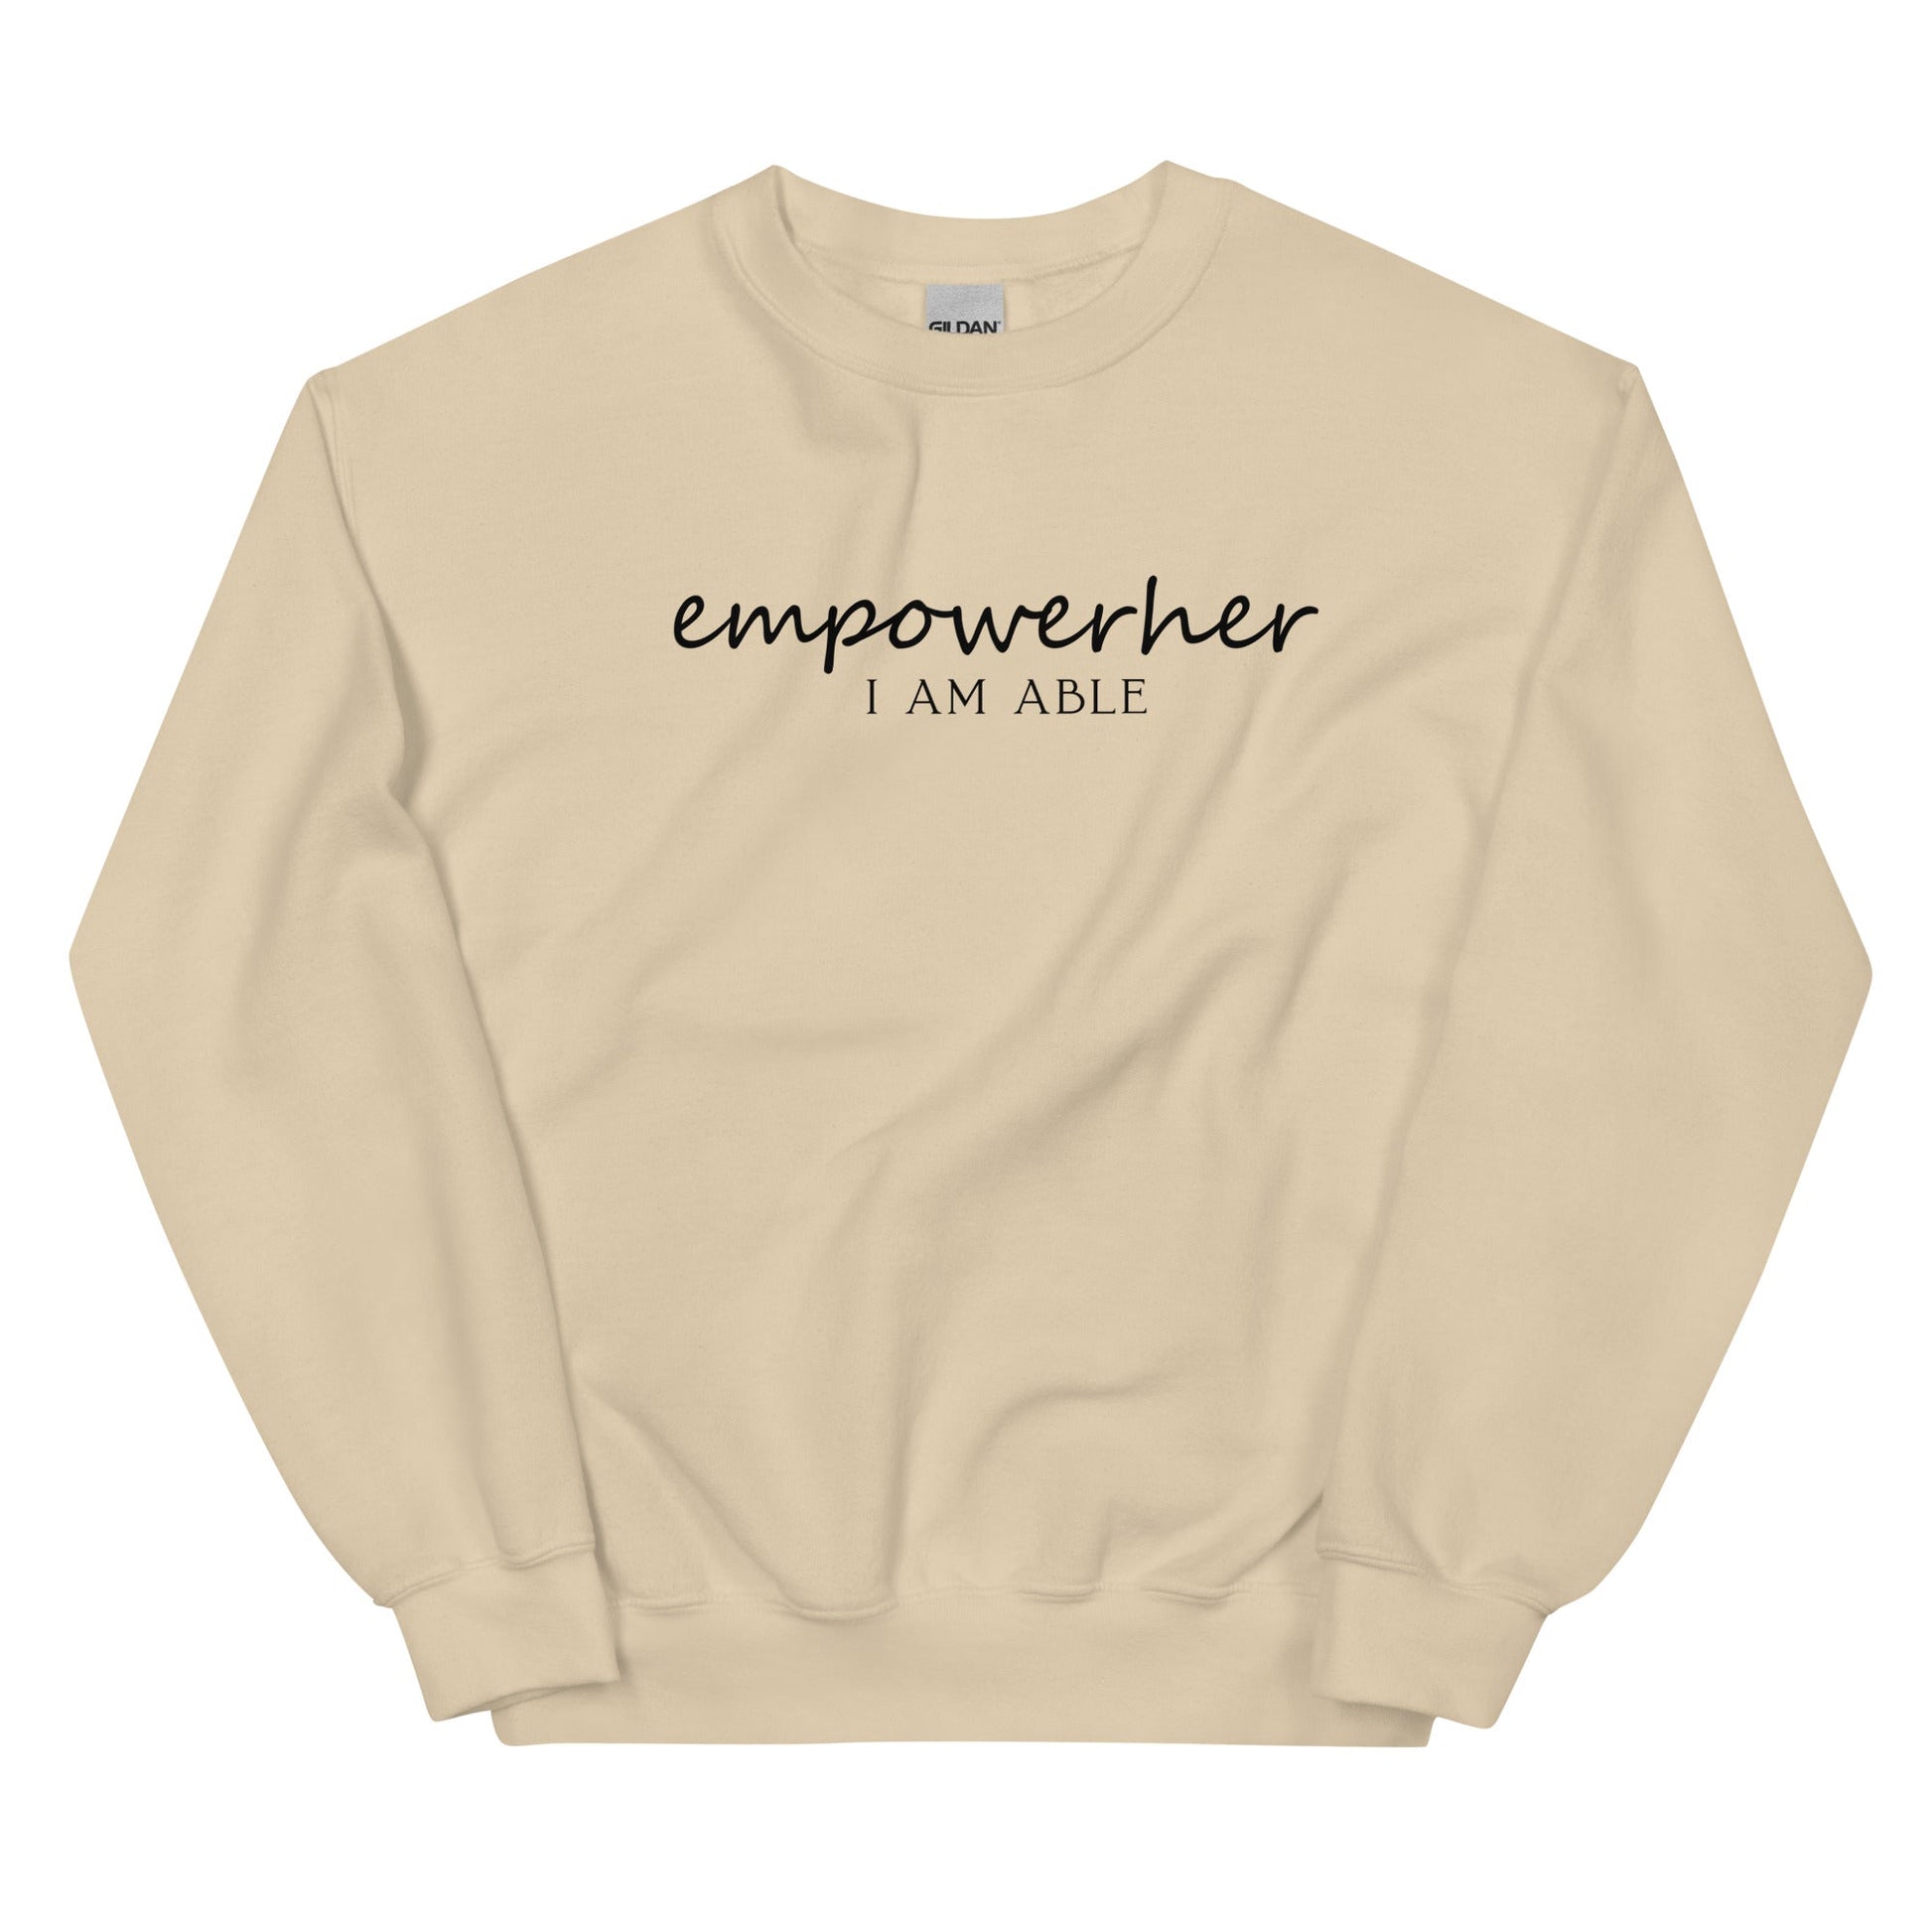 EmpowerHer I AM ABLE Sweatshirt - Sand / S